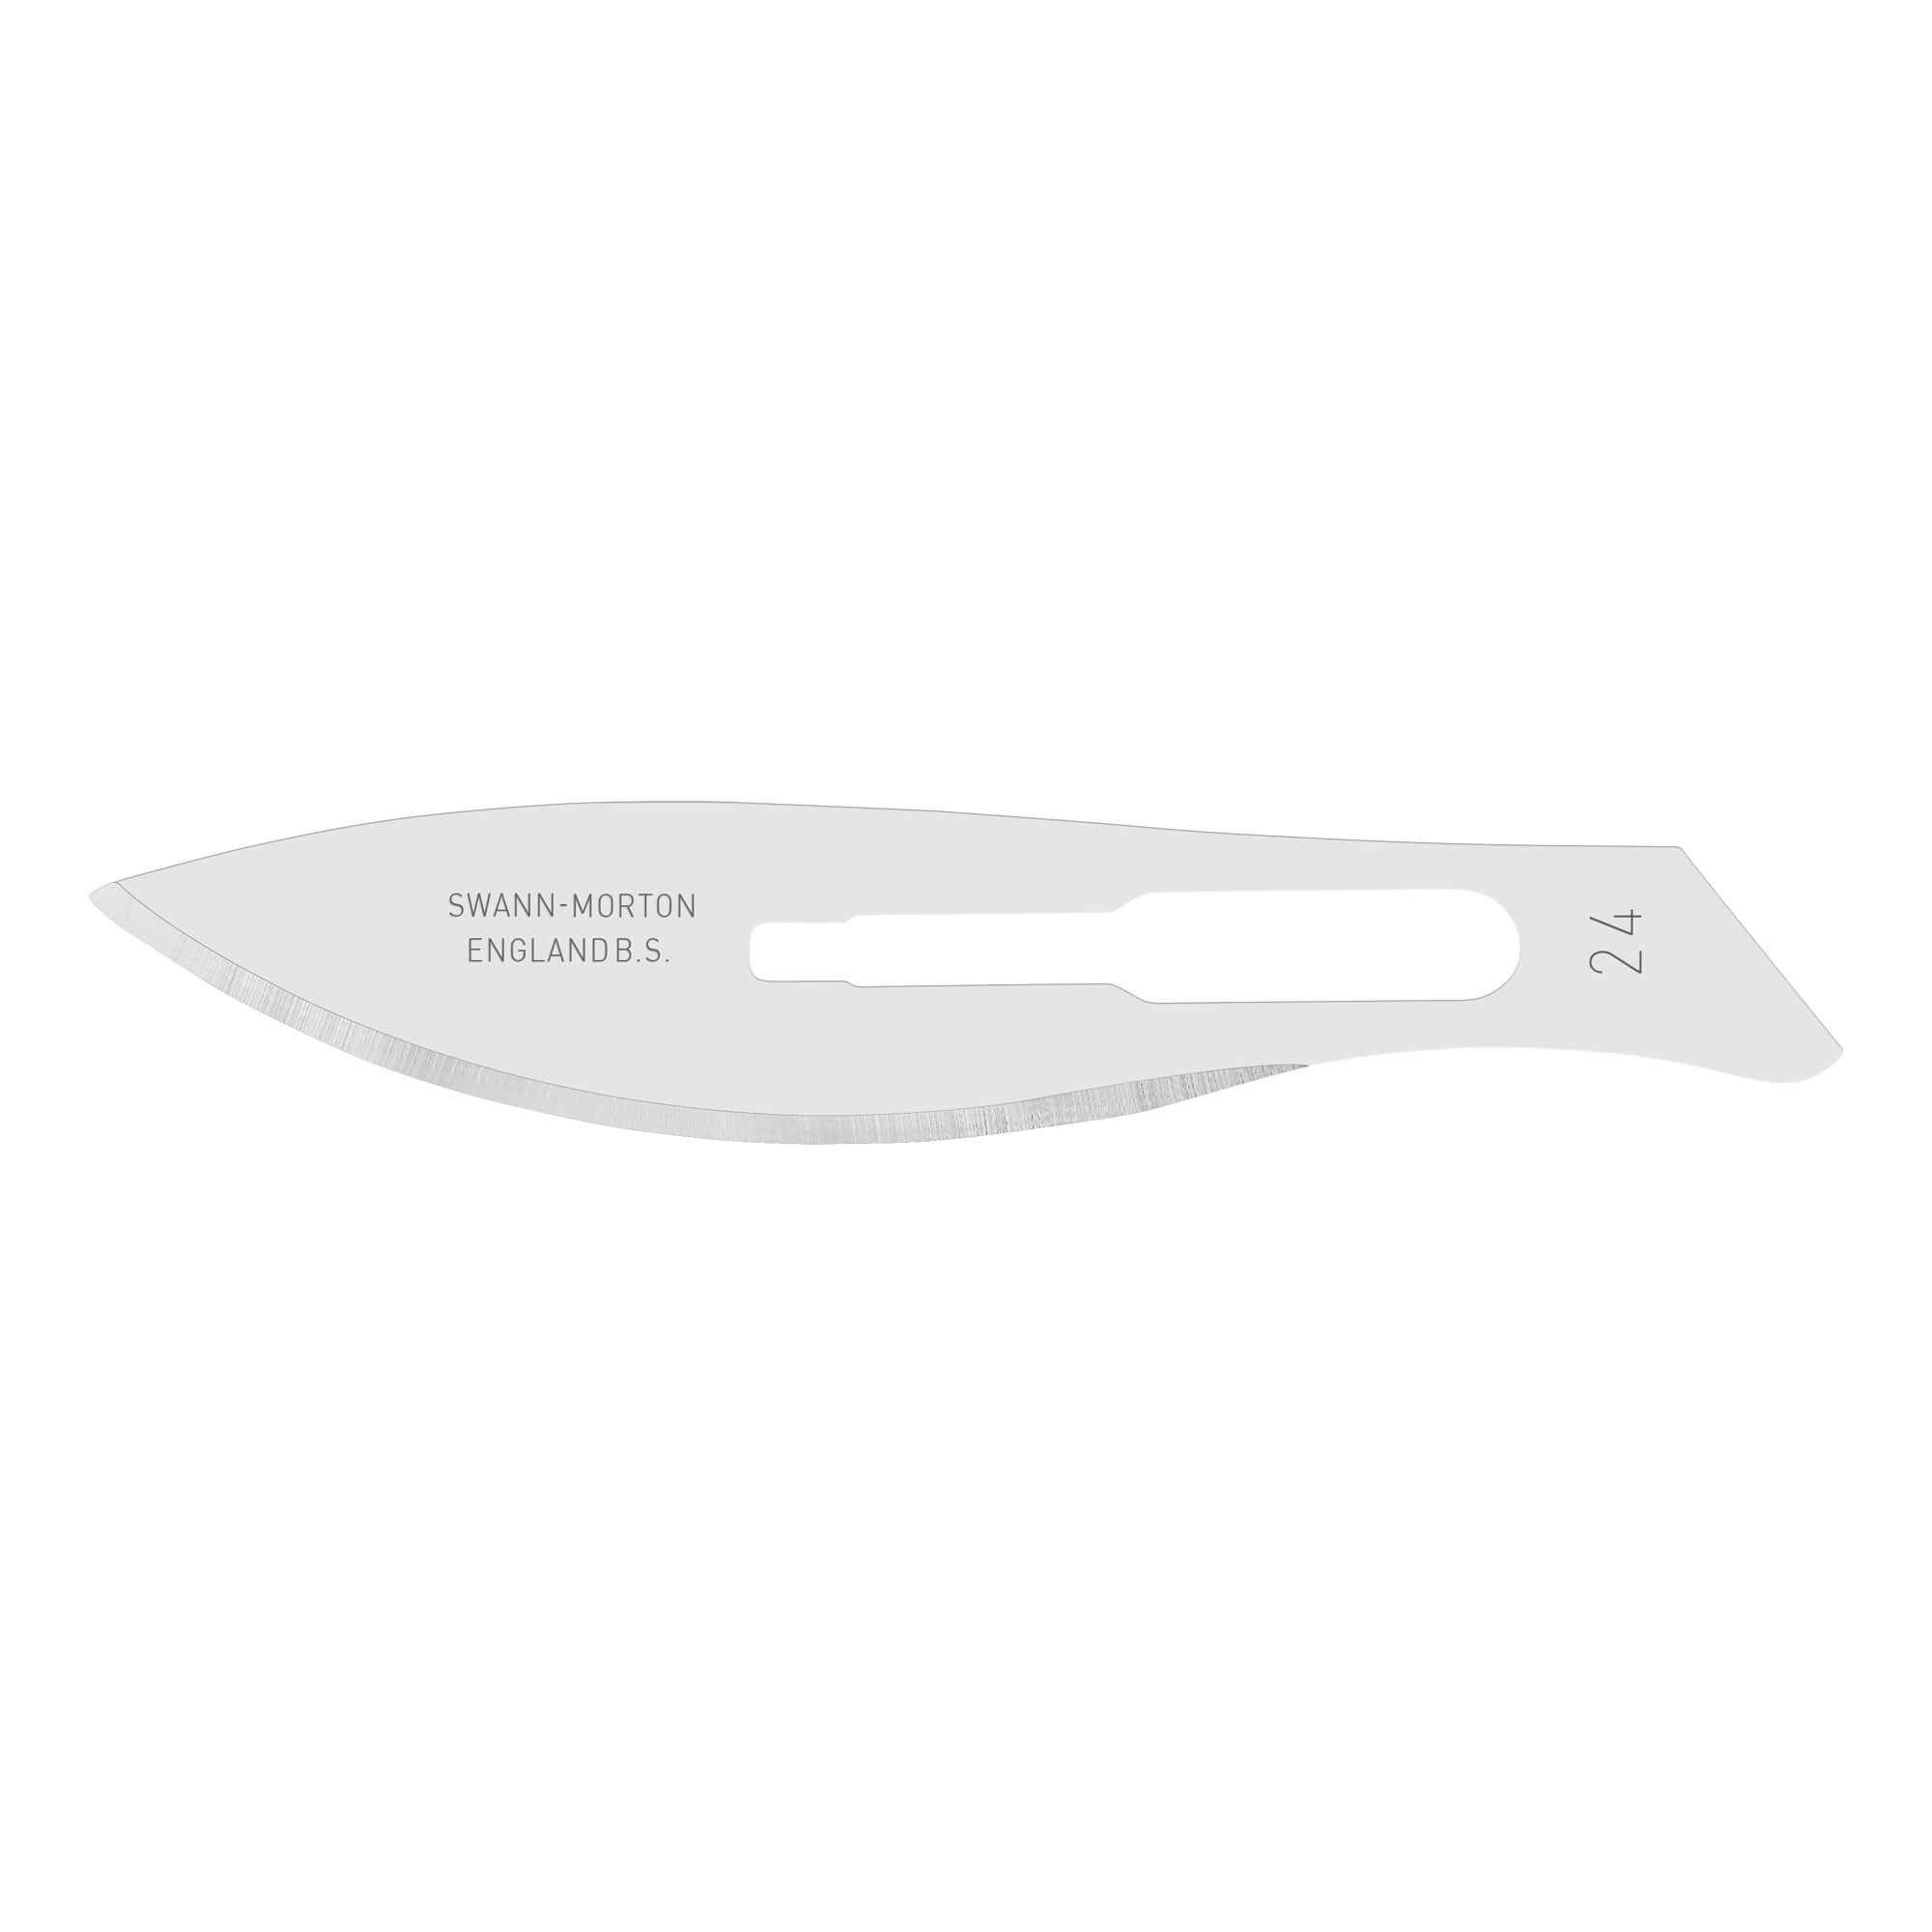 Sterile single-use professional scalpel blades Swann-Morton size 24 100 pieces